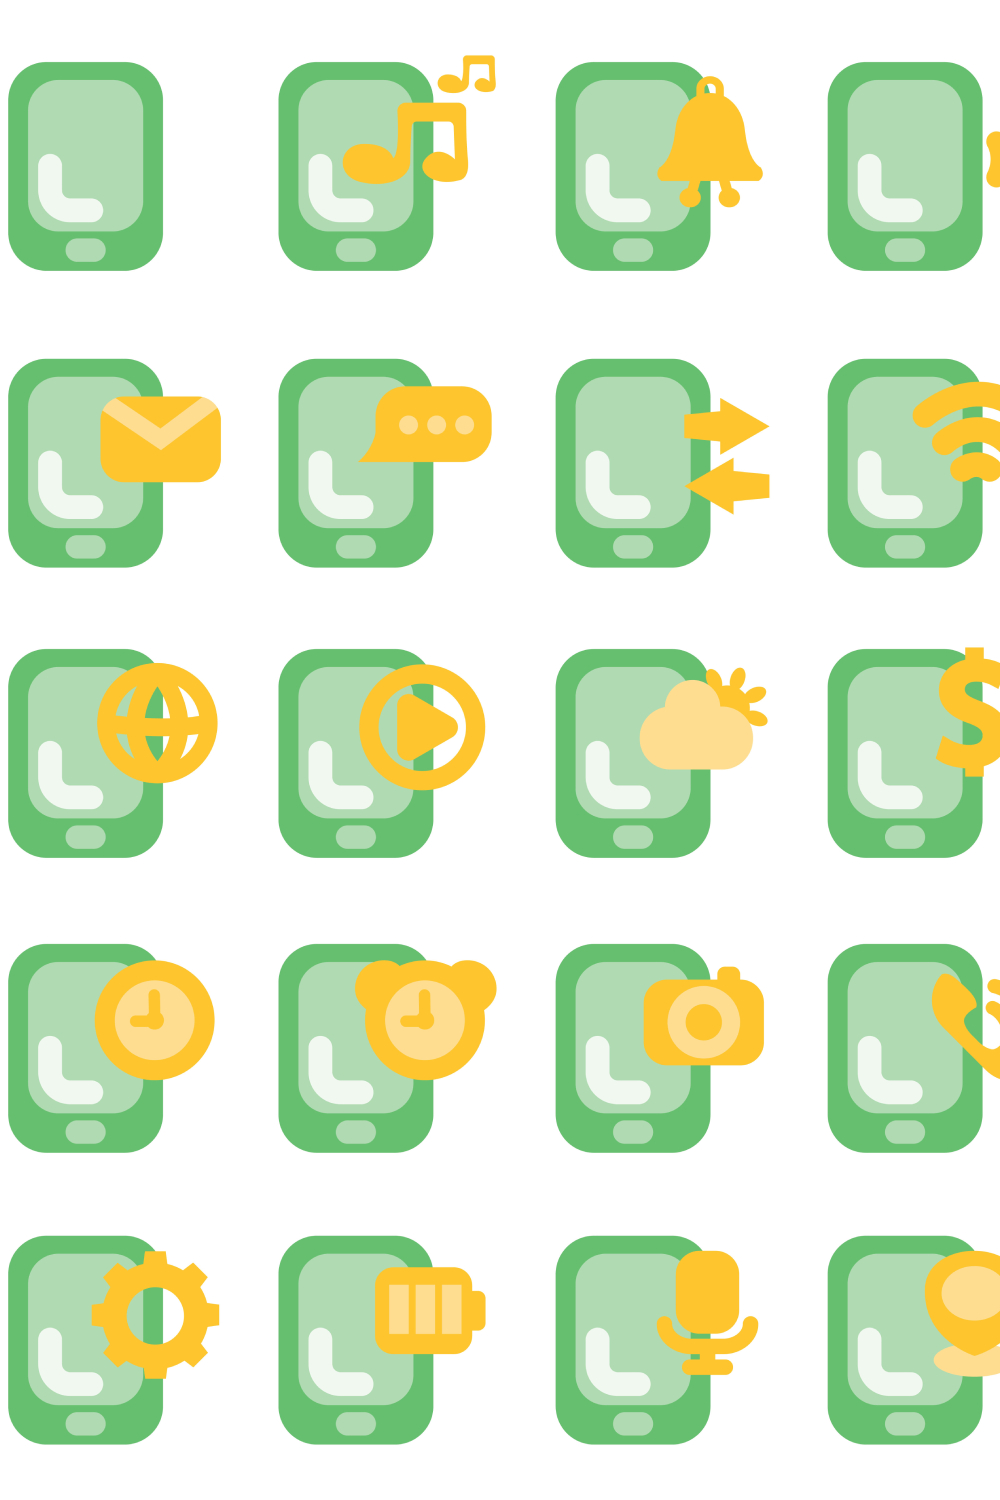 20 Phone Icons Set Pinterest Cover.